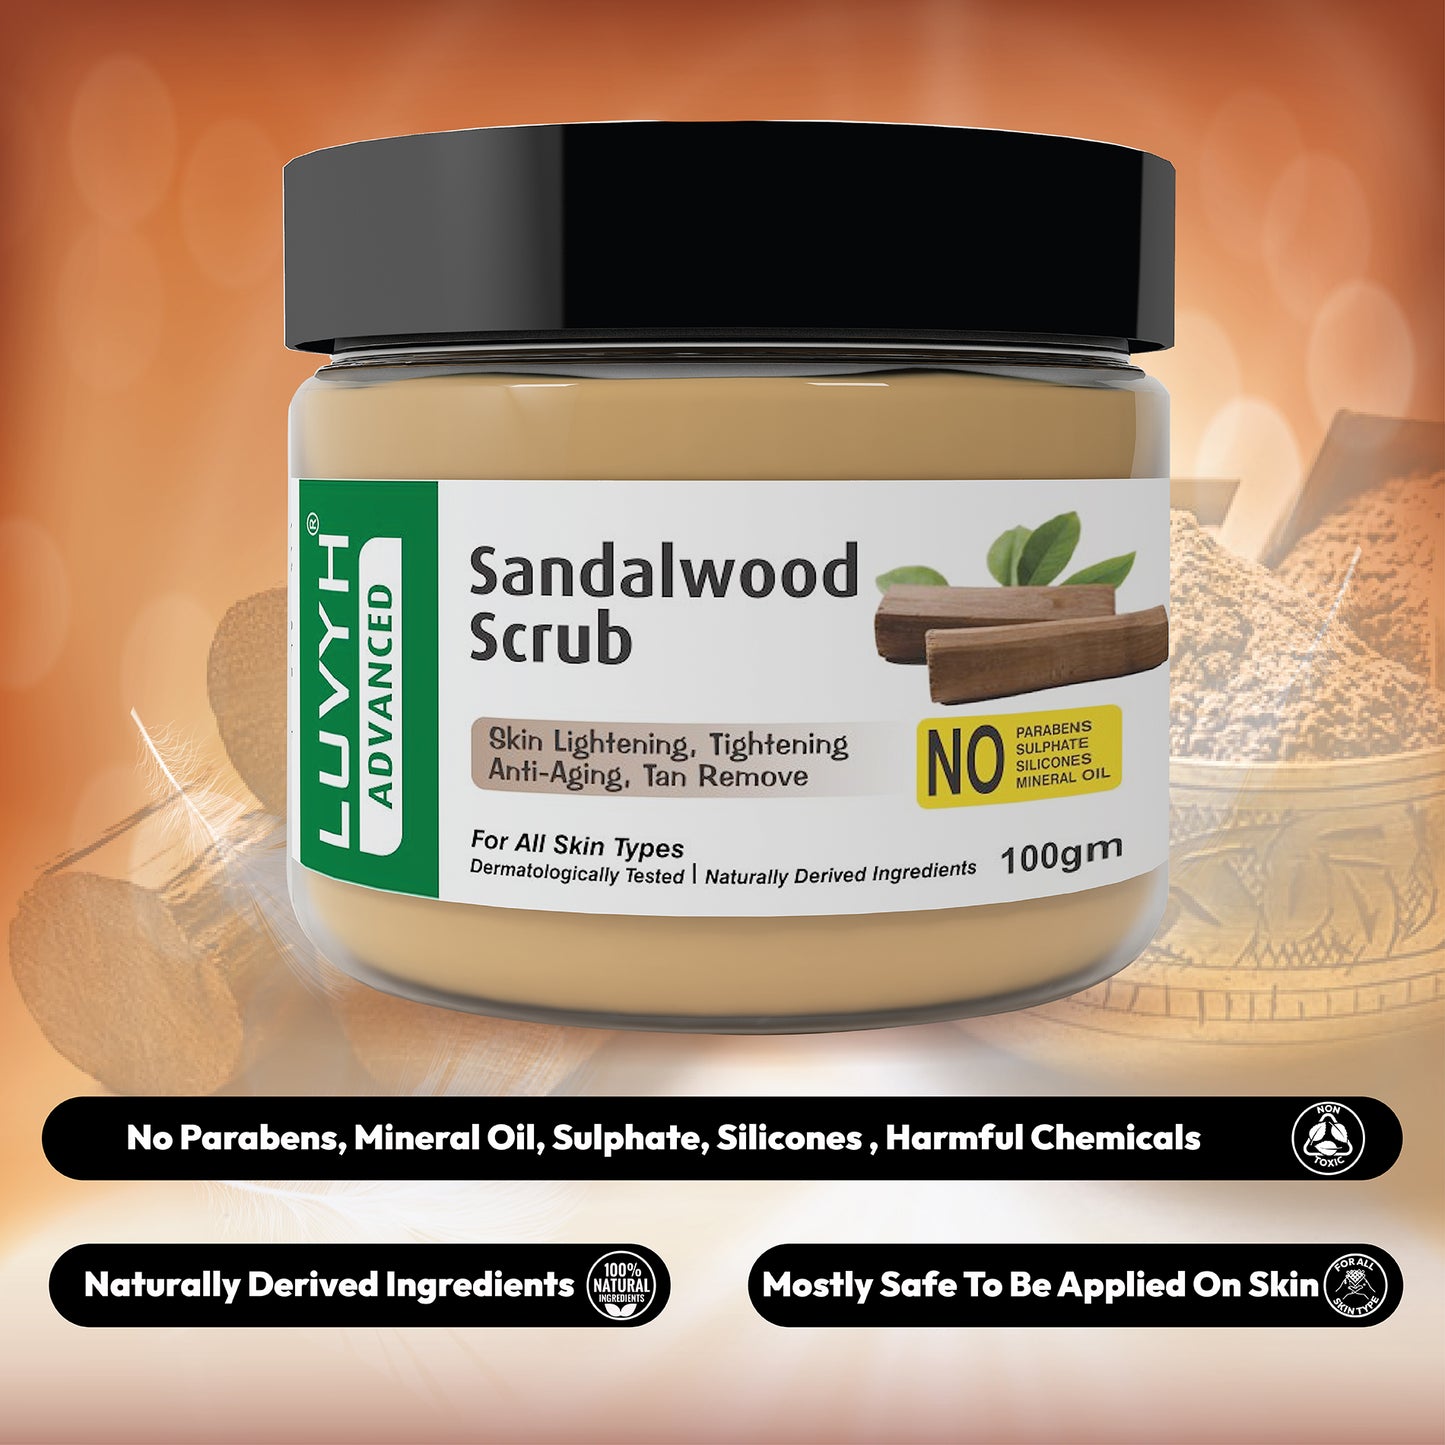 Sandalwood scrub benefits